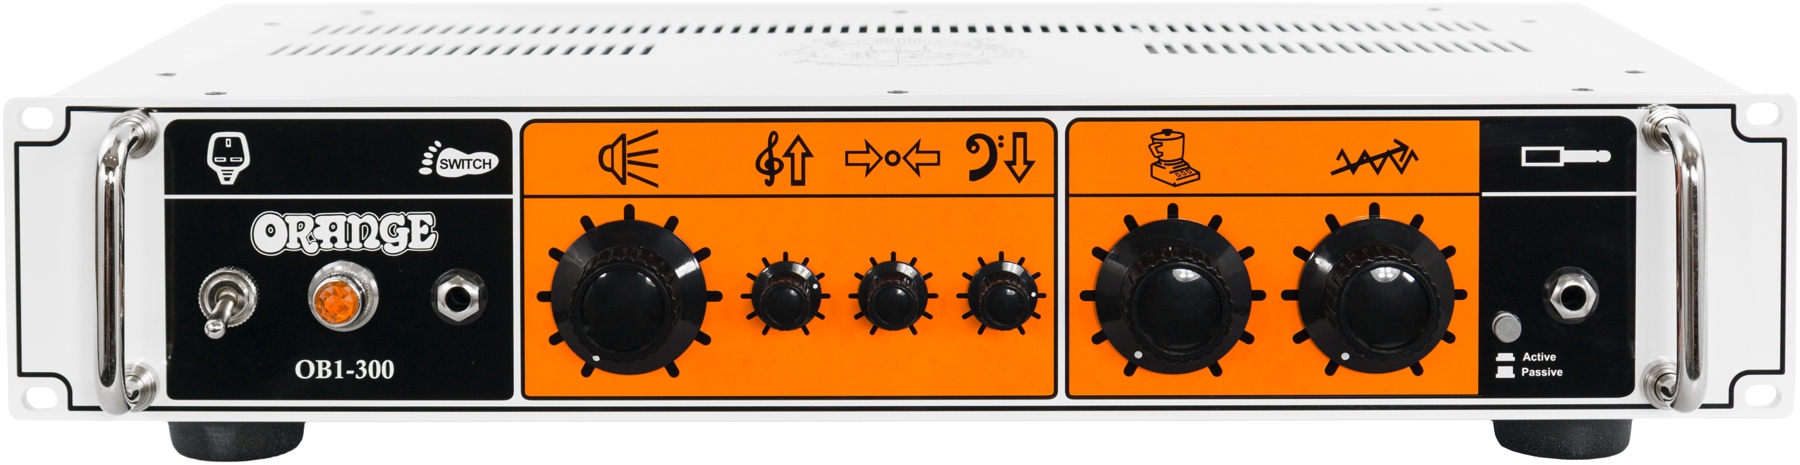 Orange Ob1-300 Rack Mountable Bass Head - Bass amp head - Variation 1